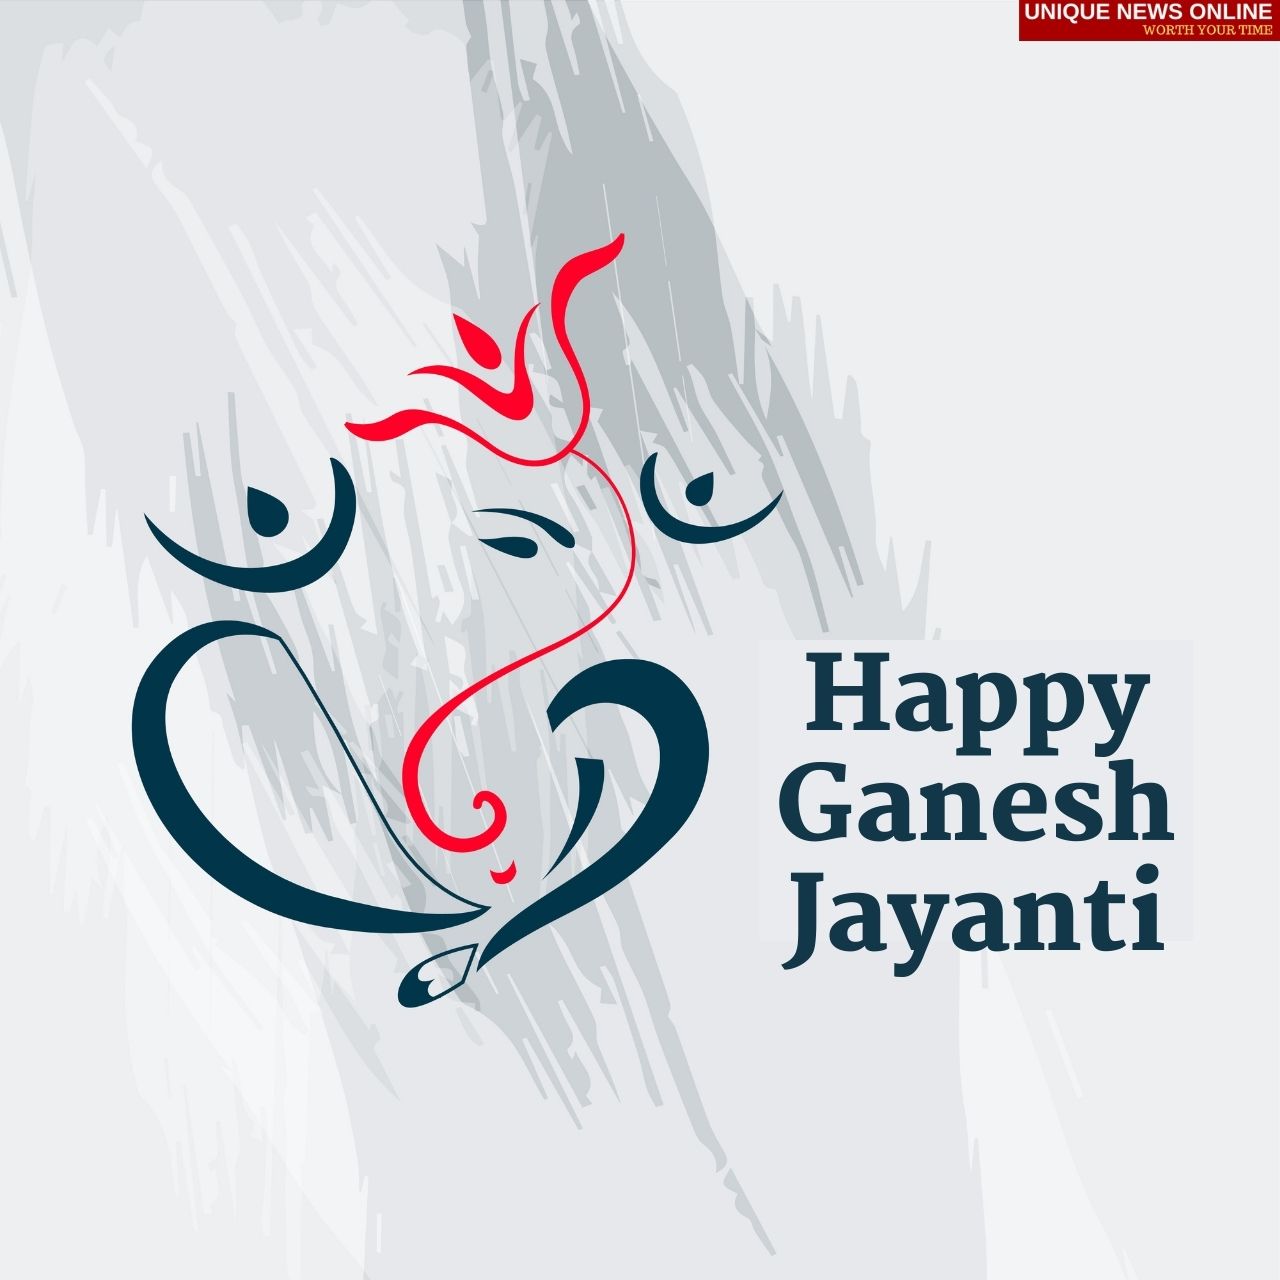 Happy Ganesh Jayanti 2022 التمنيات والاقتباسات والتحيات والرسائل والصور عالية الدقة ومقاطع فيديو حالة WhatsApp لتحية أحبائك